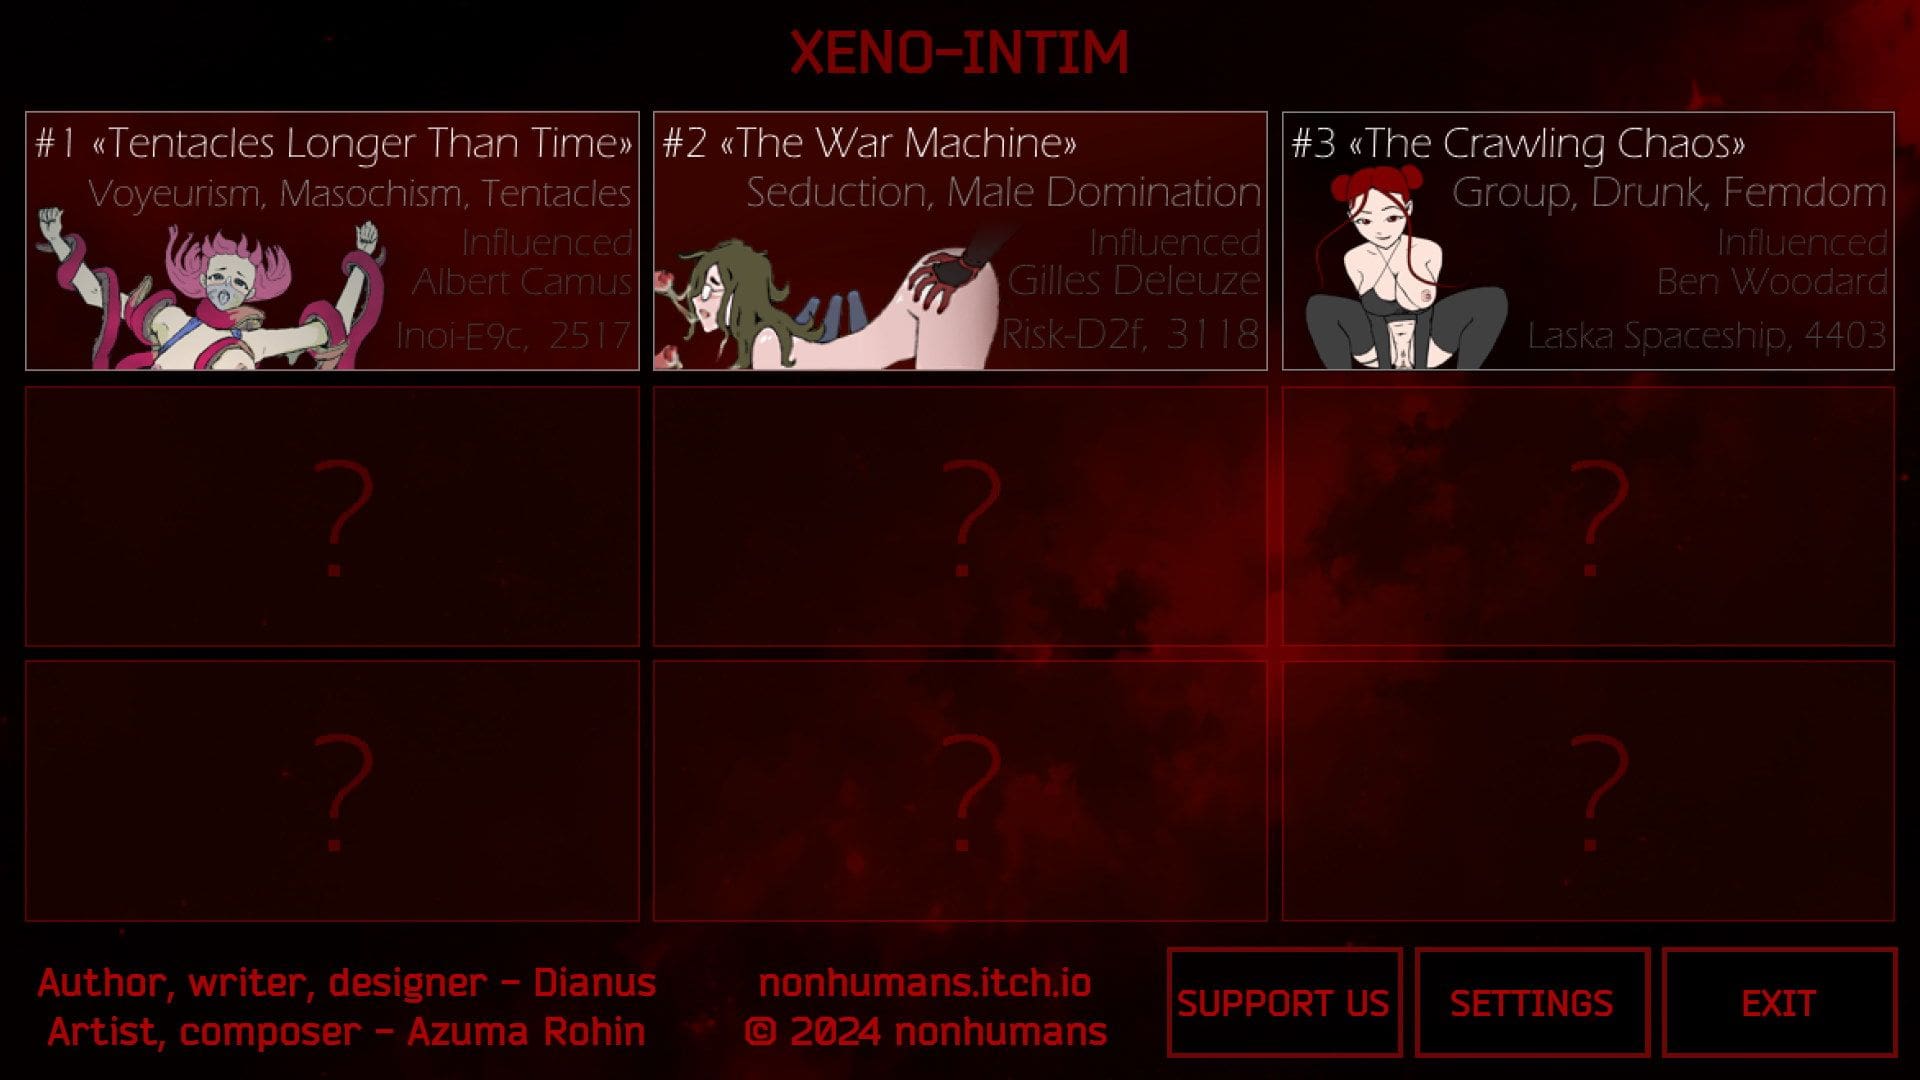 XENO-INTIM